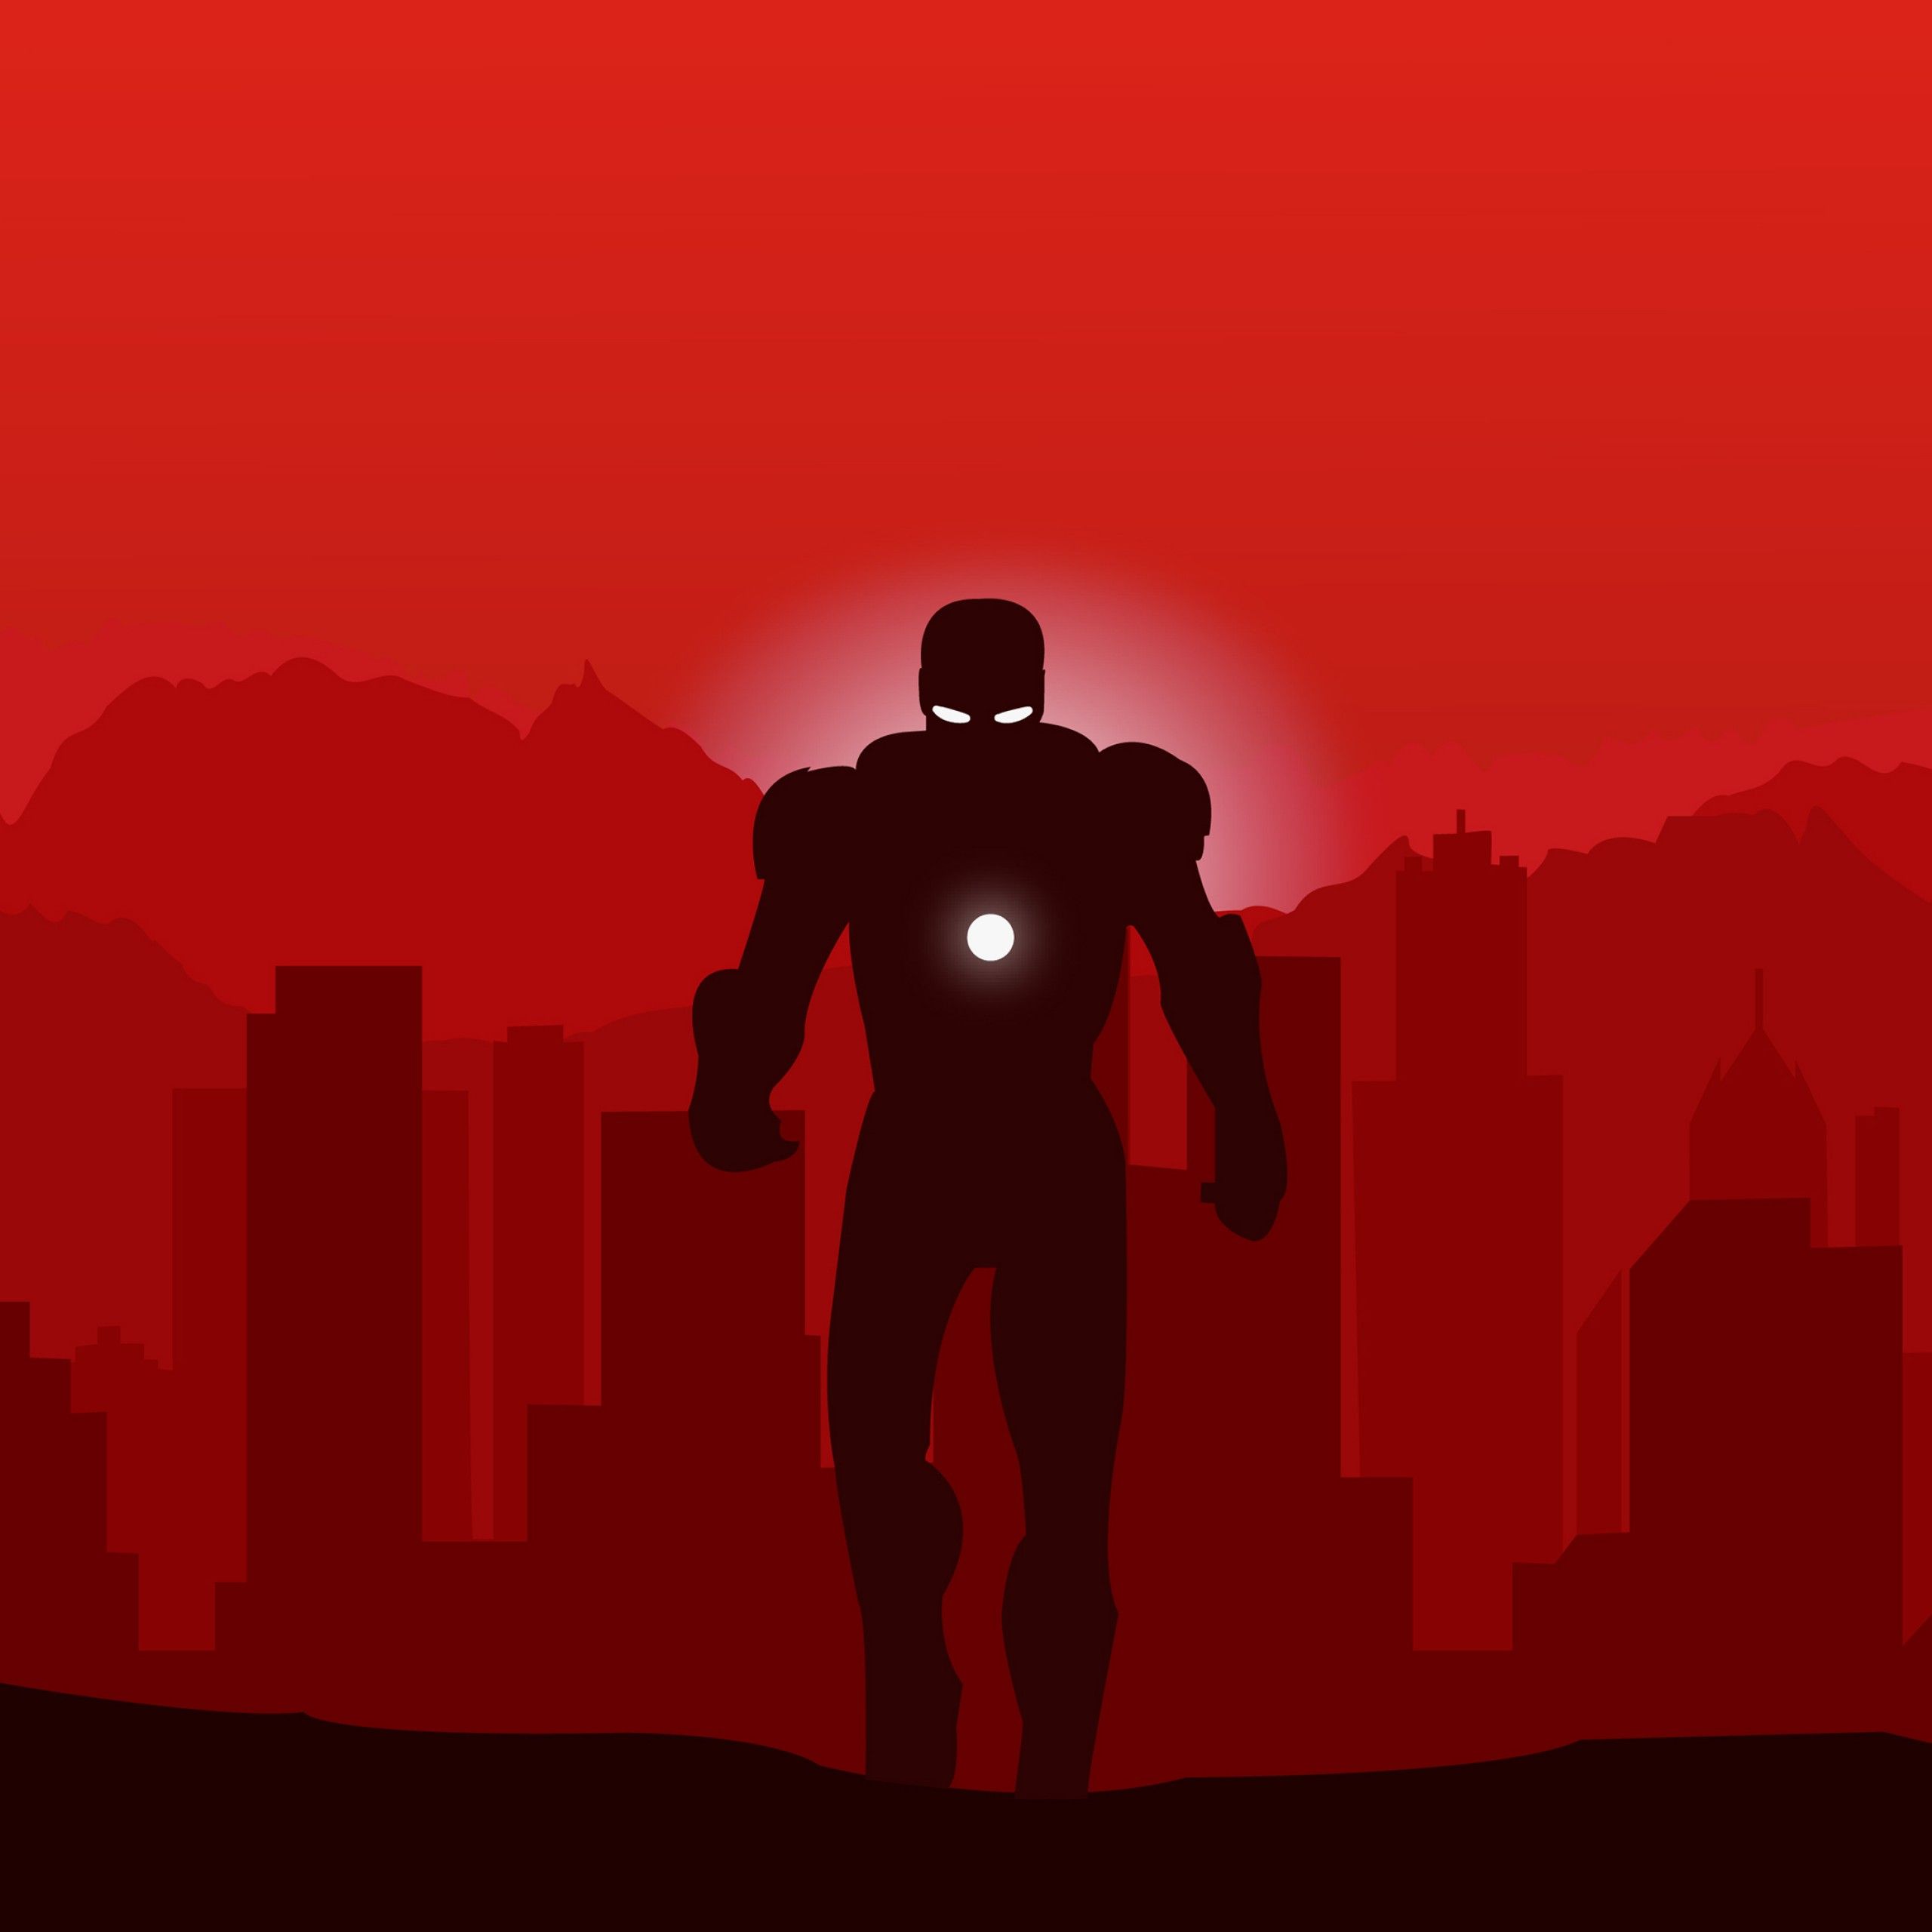 Iron Man 4K Wallpaper, Minimal art, Red, Marvel Superheroes, Graphics CGI